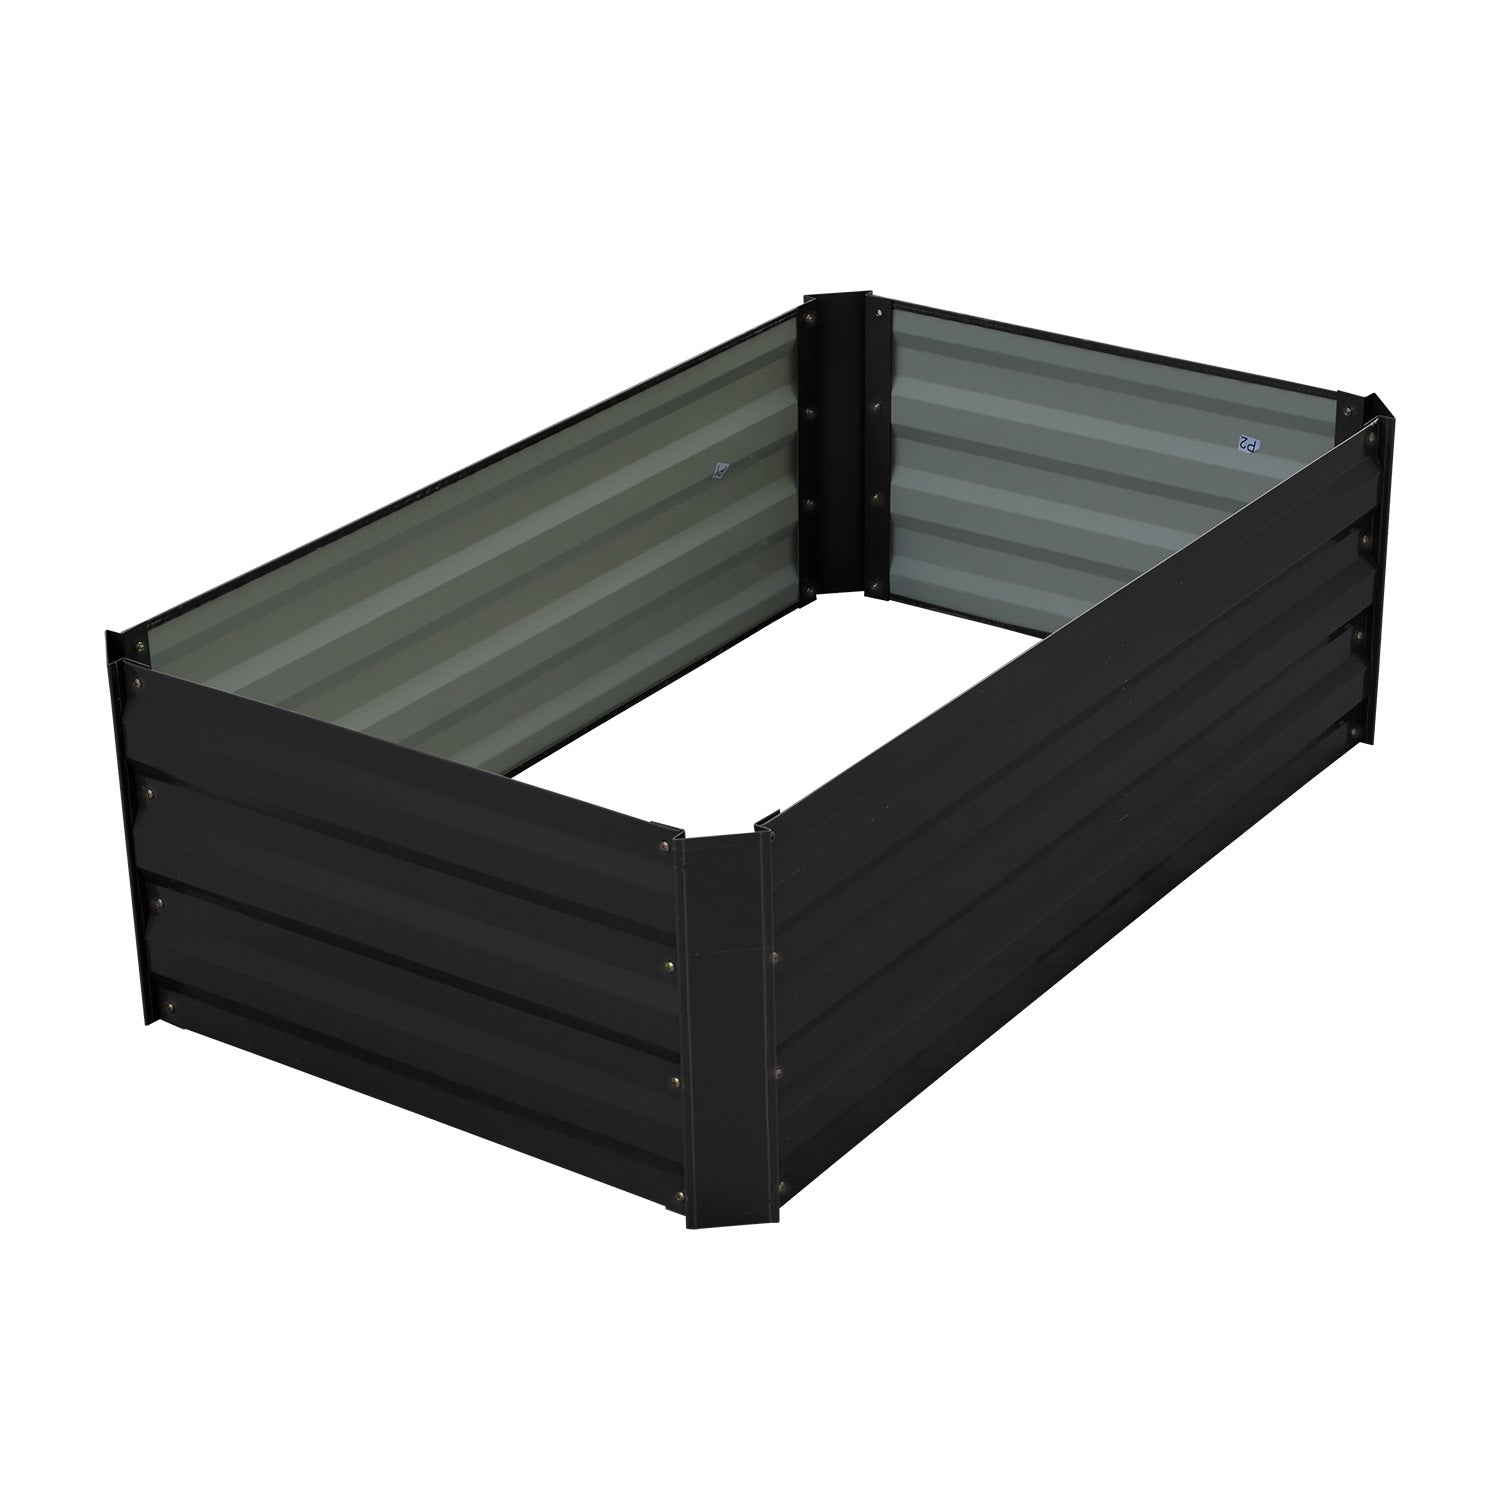 Wallaroo Garden Bed Galvanized Steel - Black 100 x 60 x 30cm